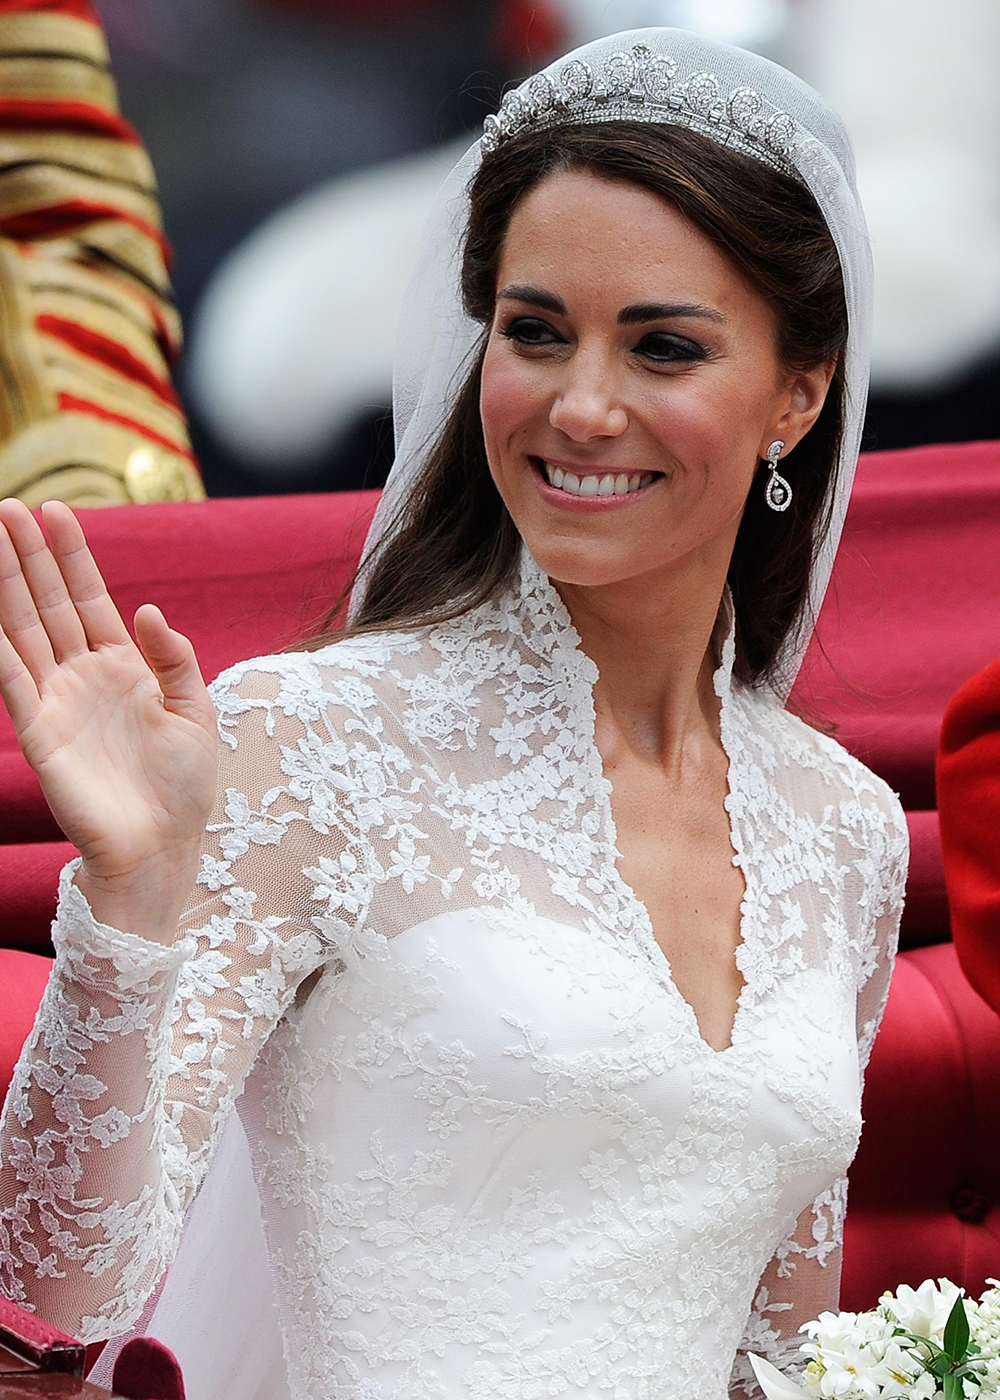 Kate Middleton wearing a Cartier tiara on her wedding day in 2011.